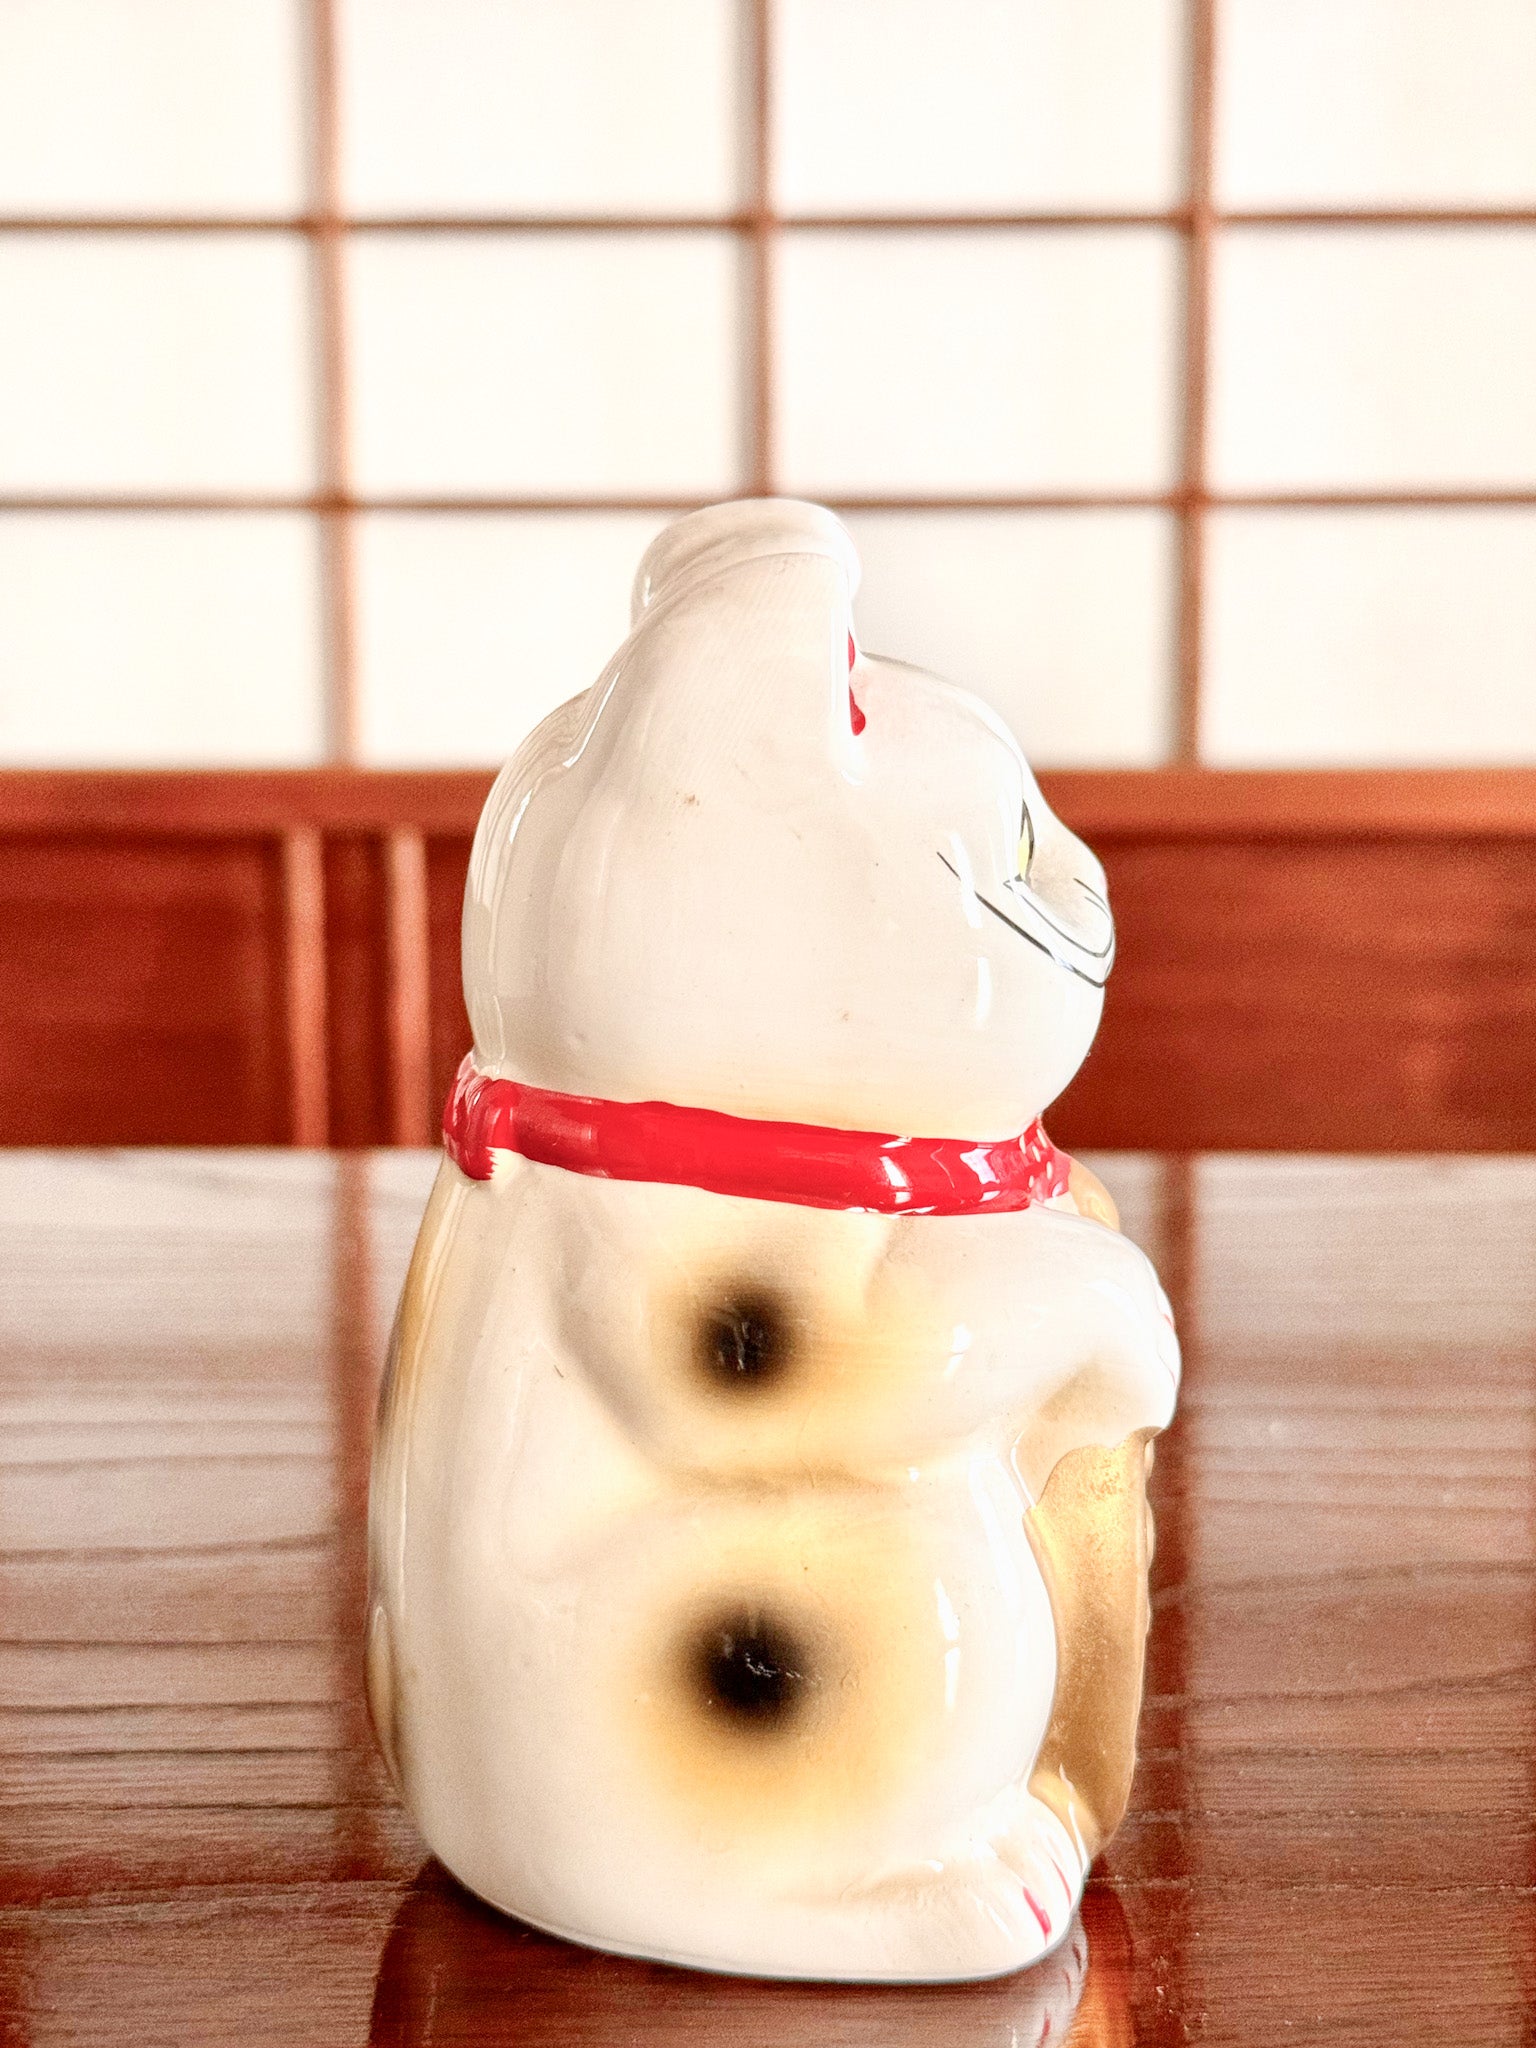 Maneki neko ceramique patte gauche profil droit